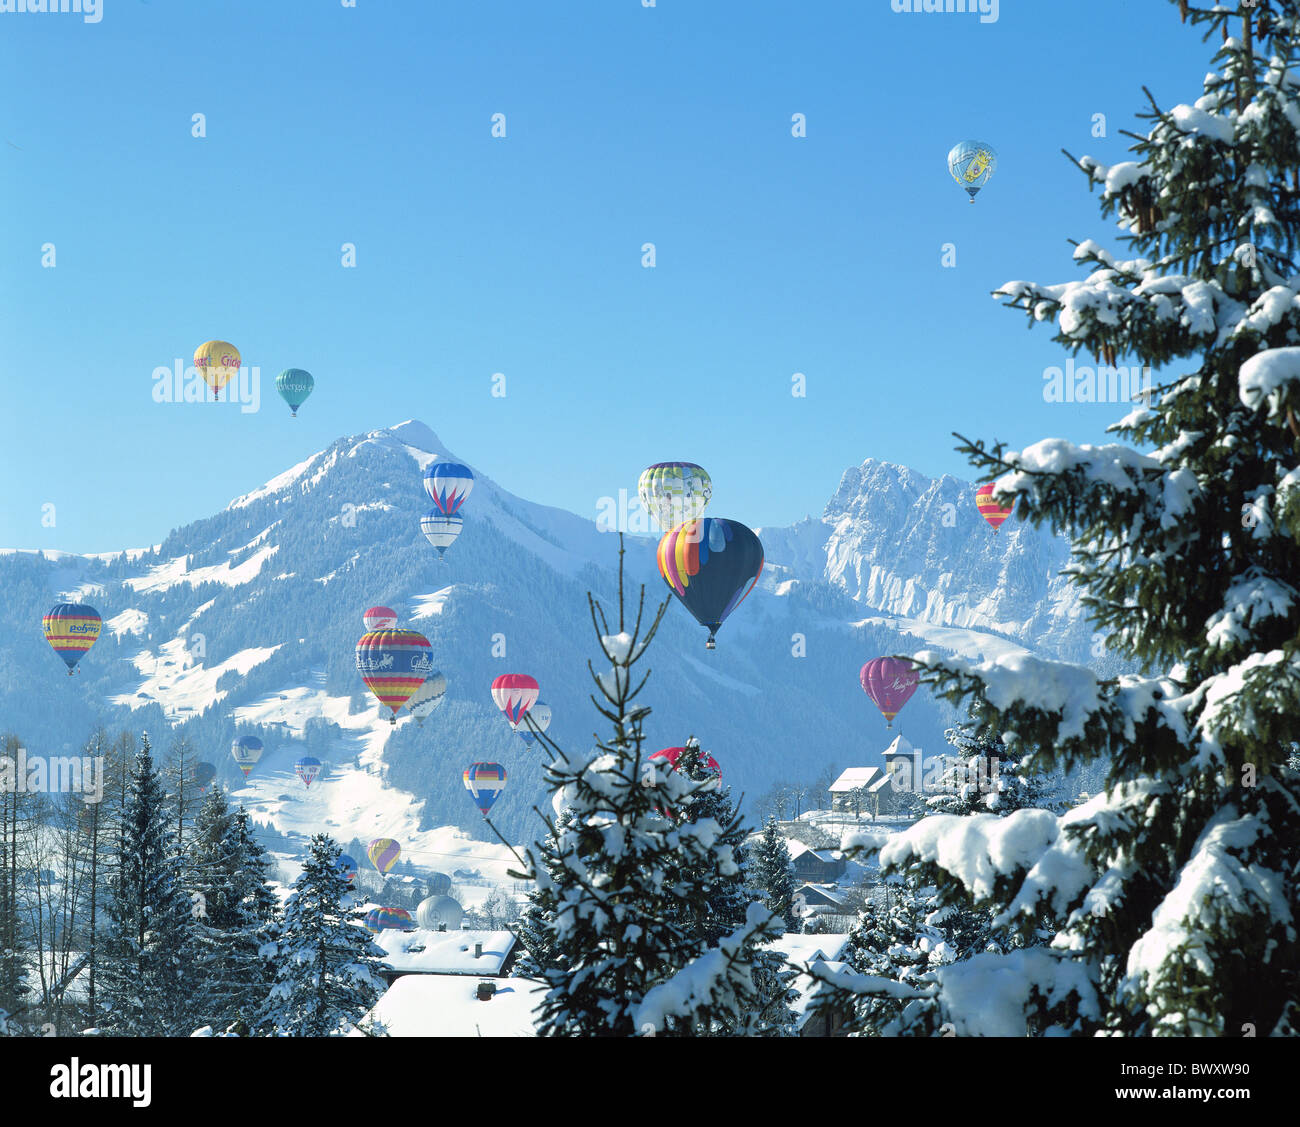 In mongolfiera ballooning Chateau d'Oex international balloon settimana Svizzera Europa Vaud inverno Foto Stock